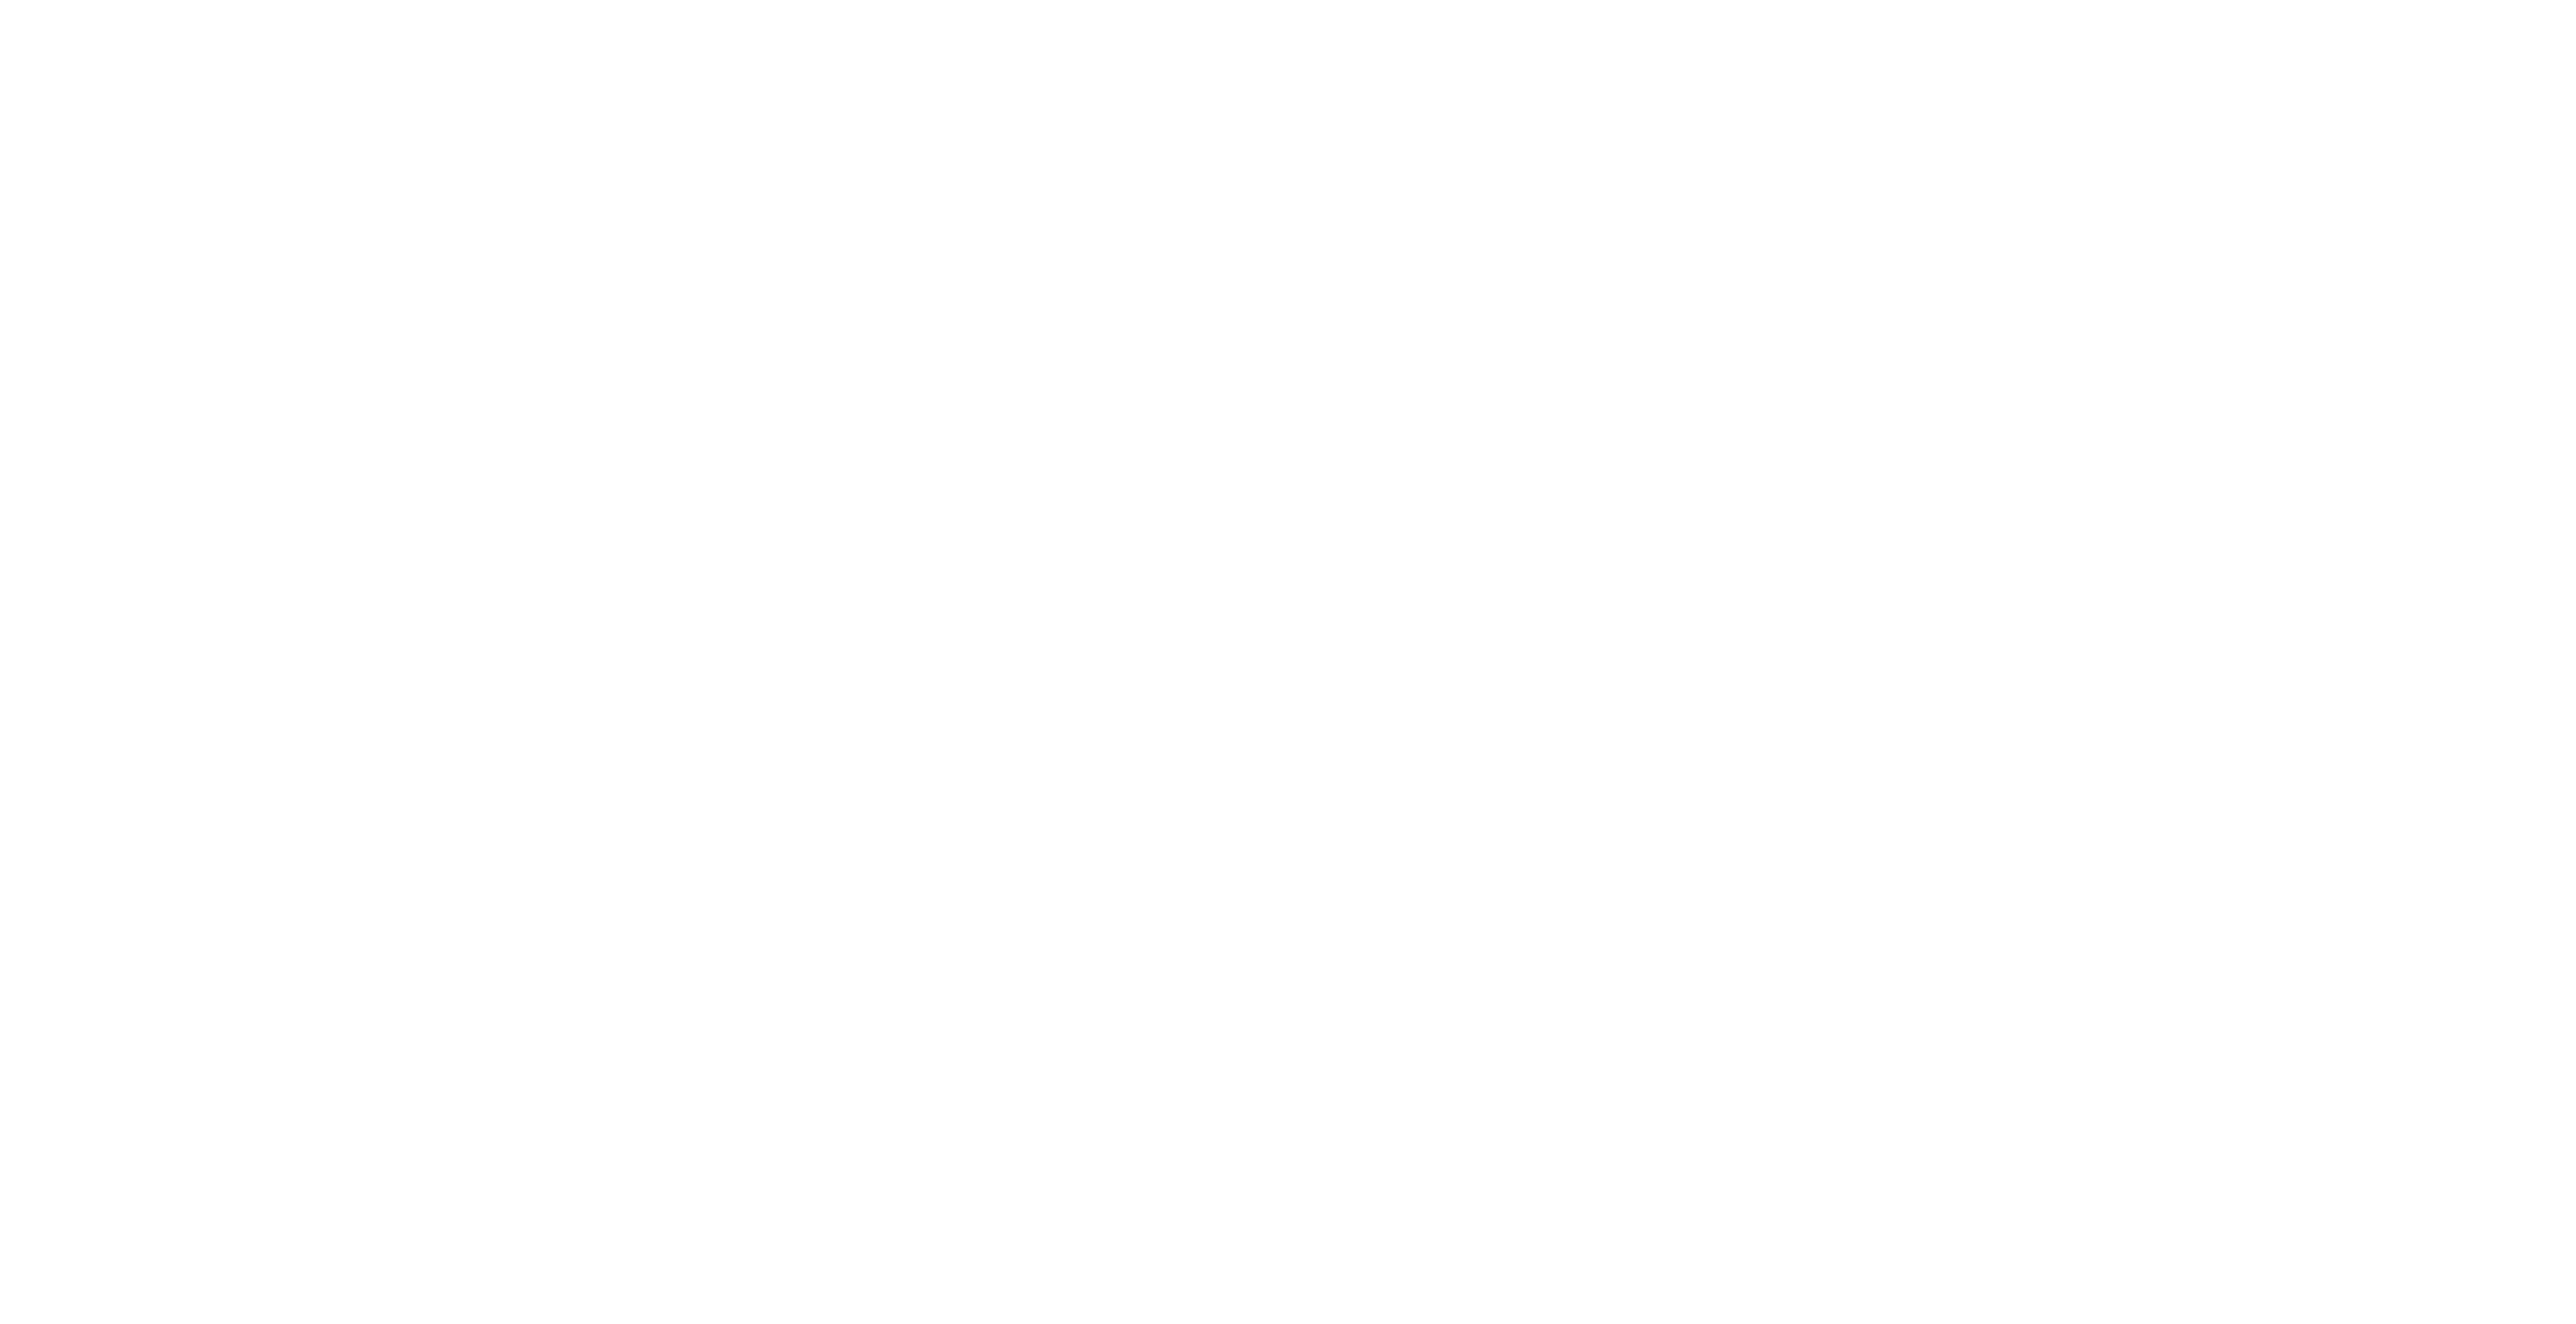 The Stationed Traveller Design Co.